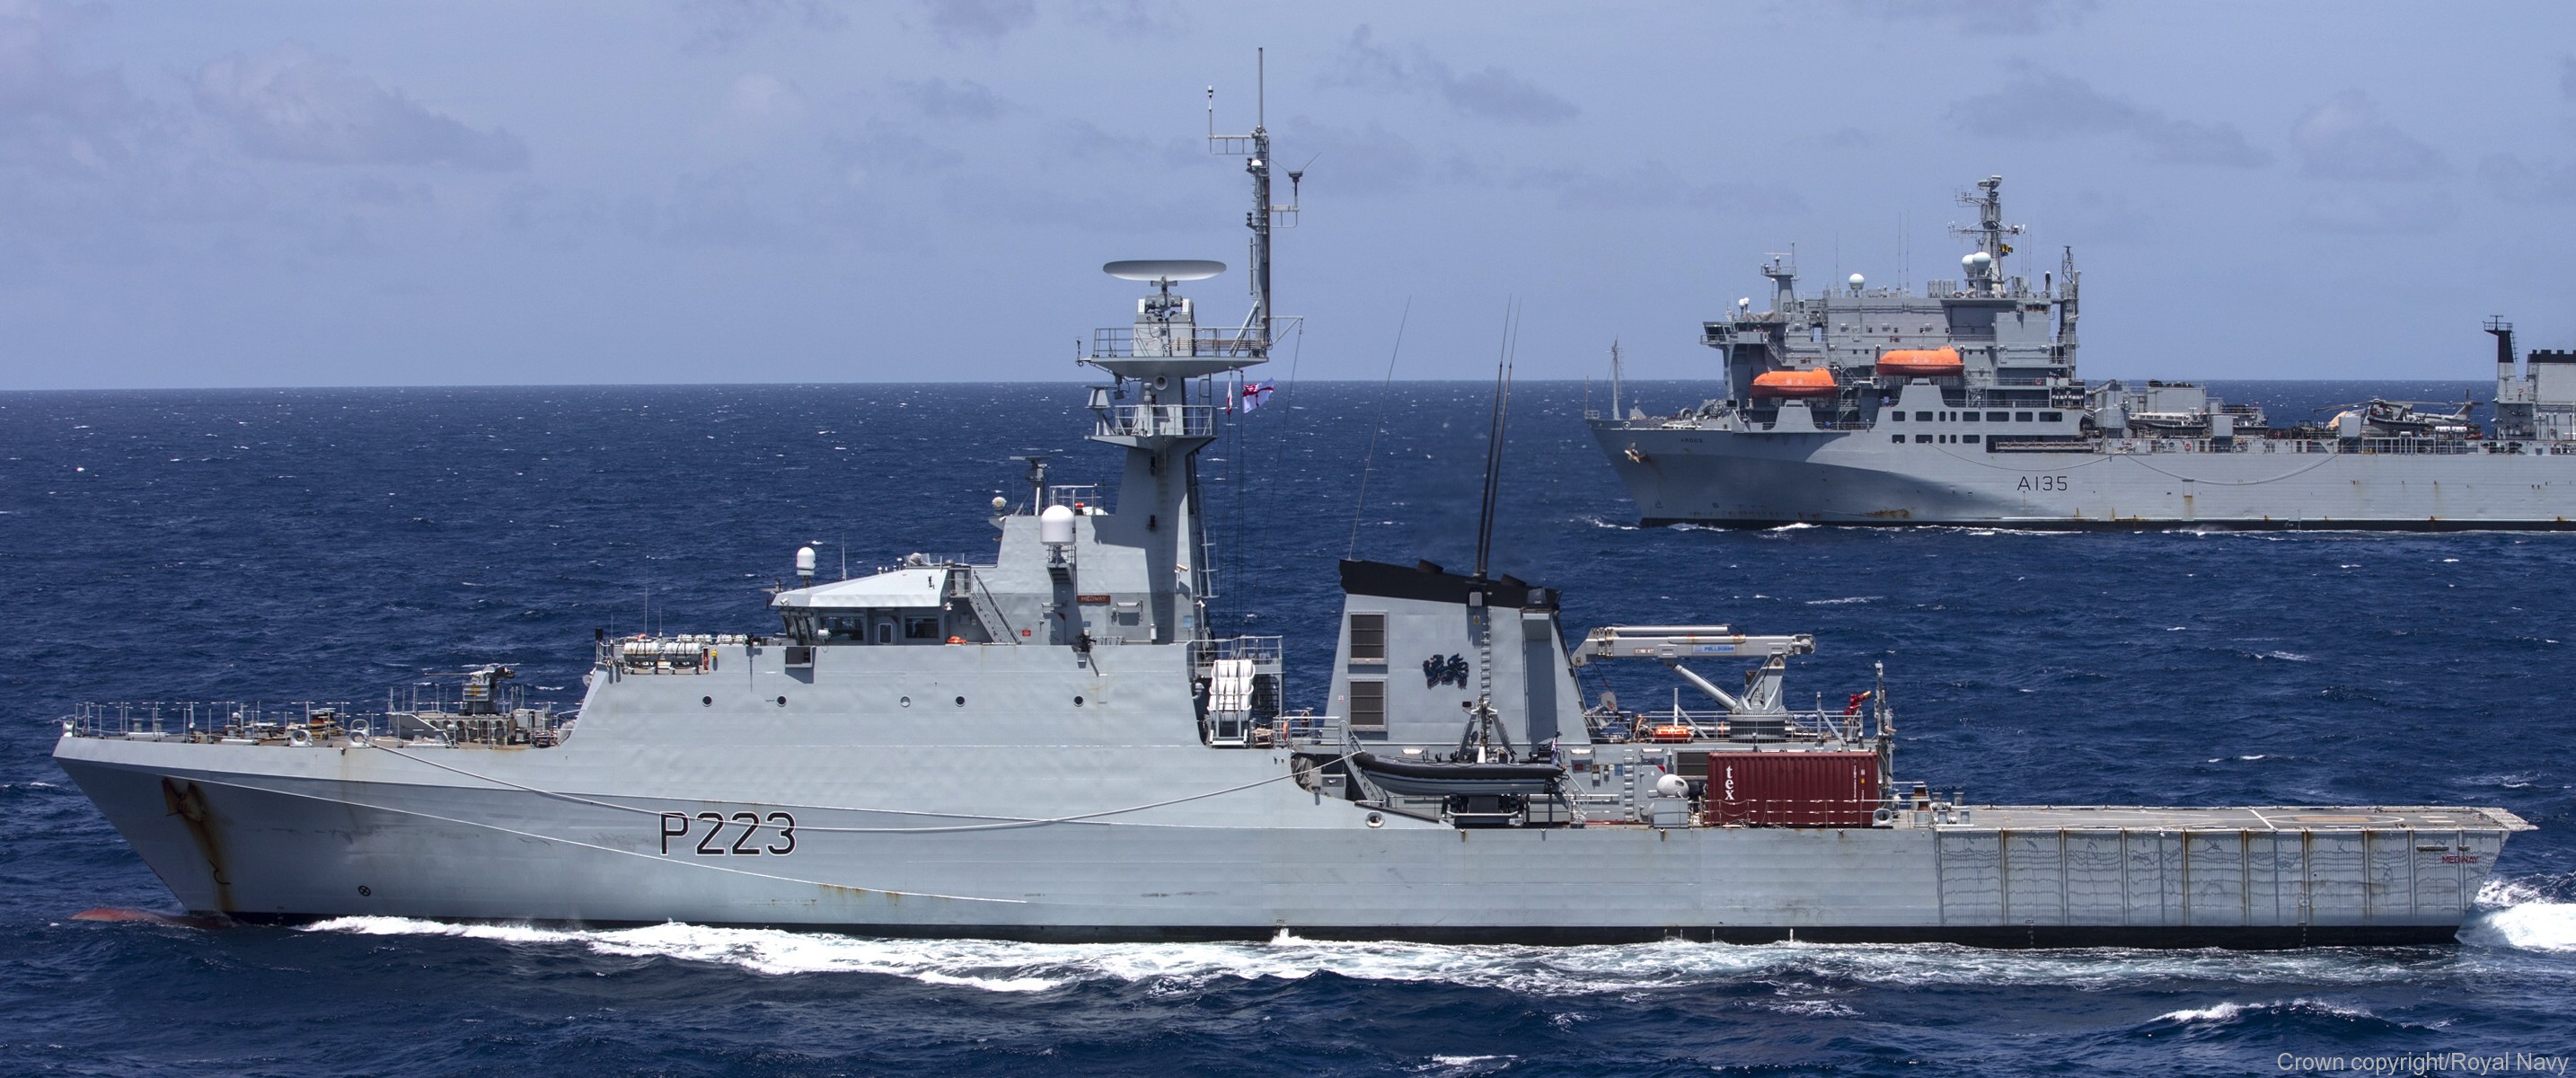 p-223 hms medway river class offshore patrol vessel opv royal navy 16